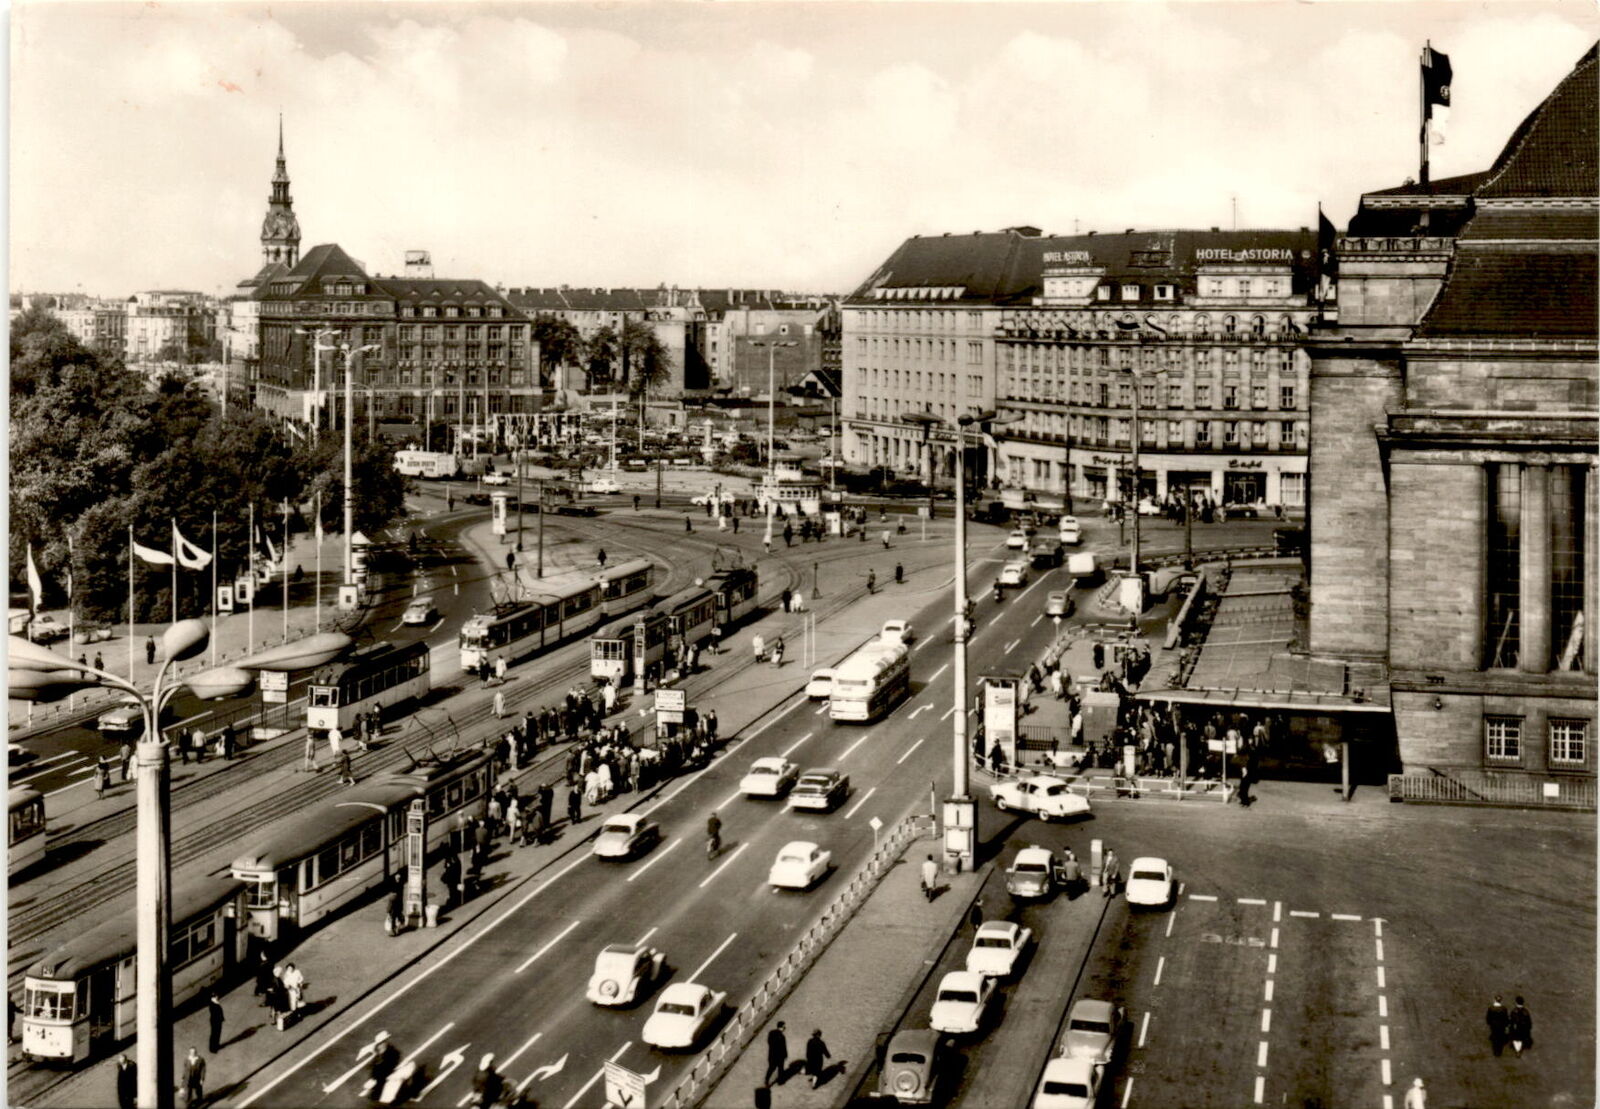 Hotel Astoria, Messestadt Leipzig, main train station, German, Postcard